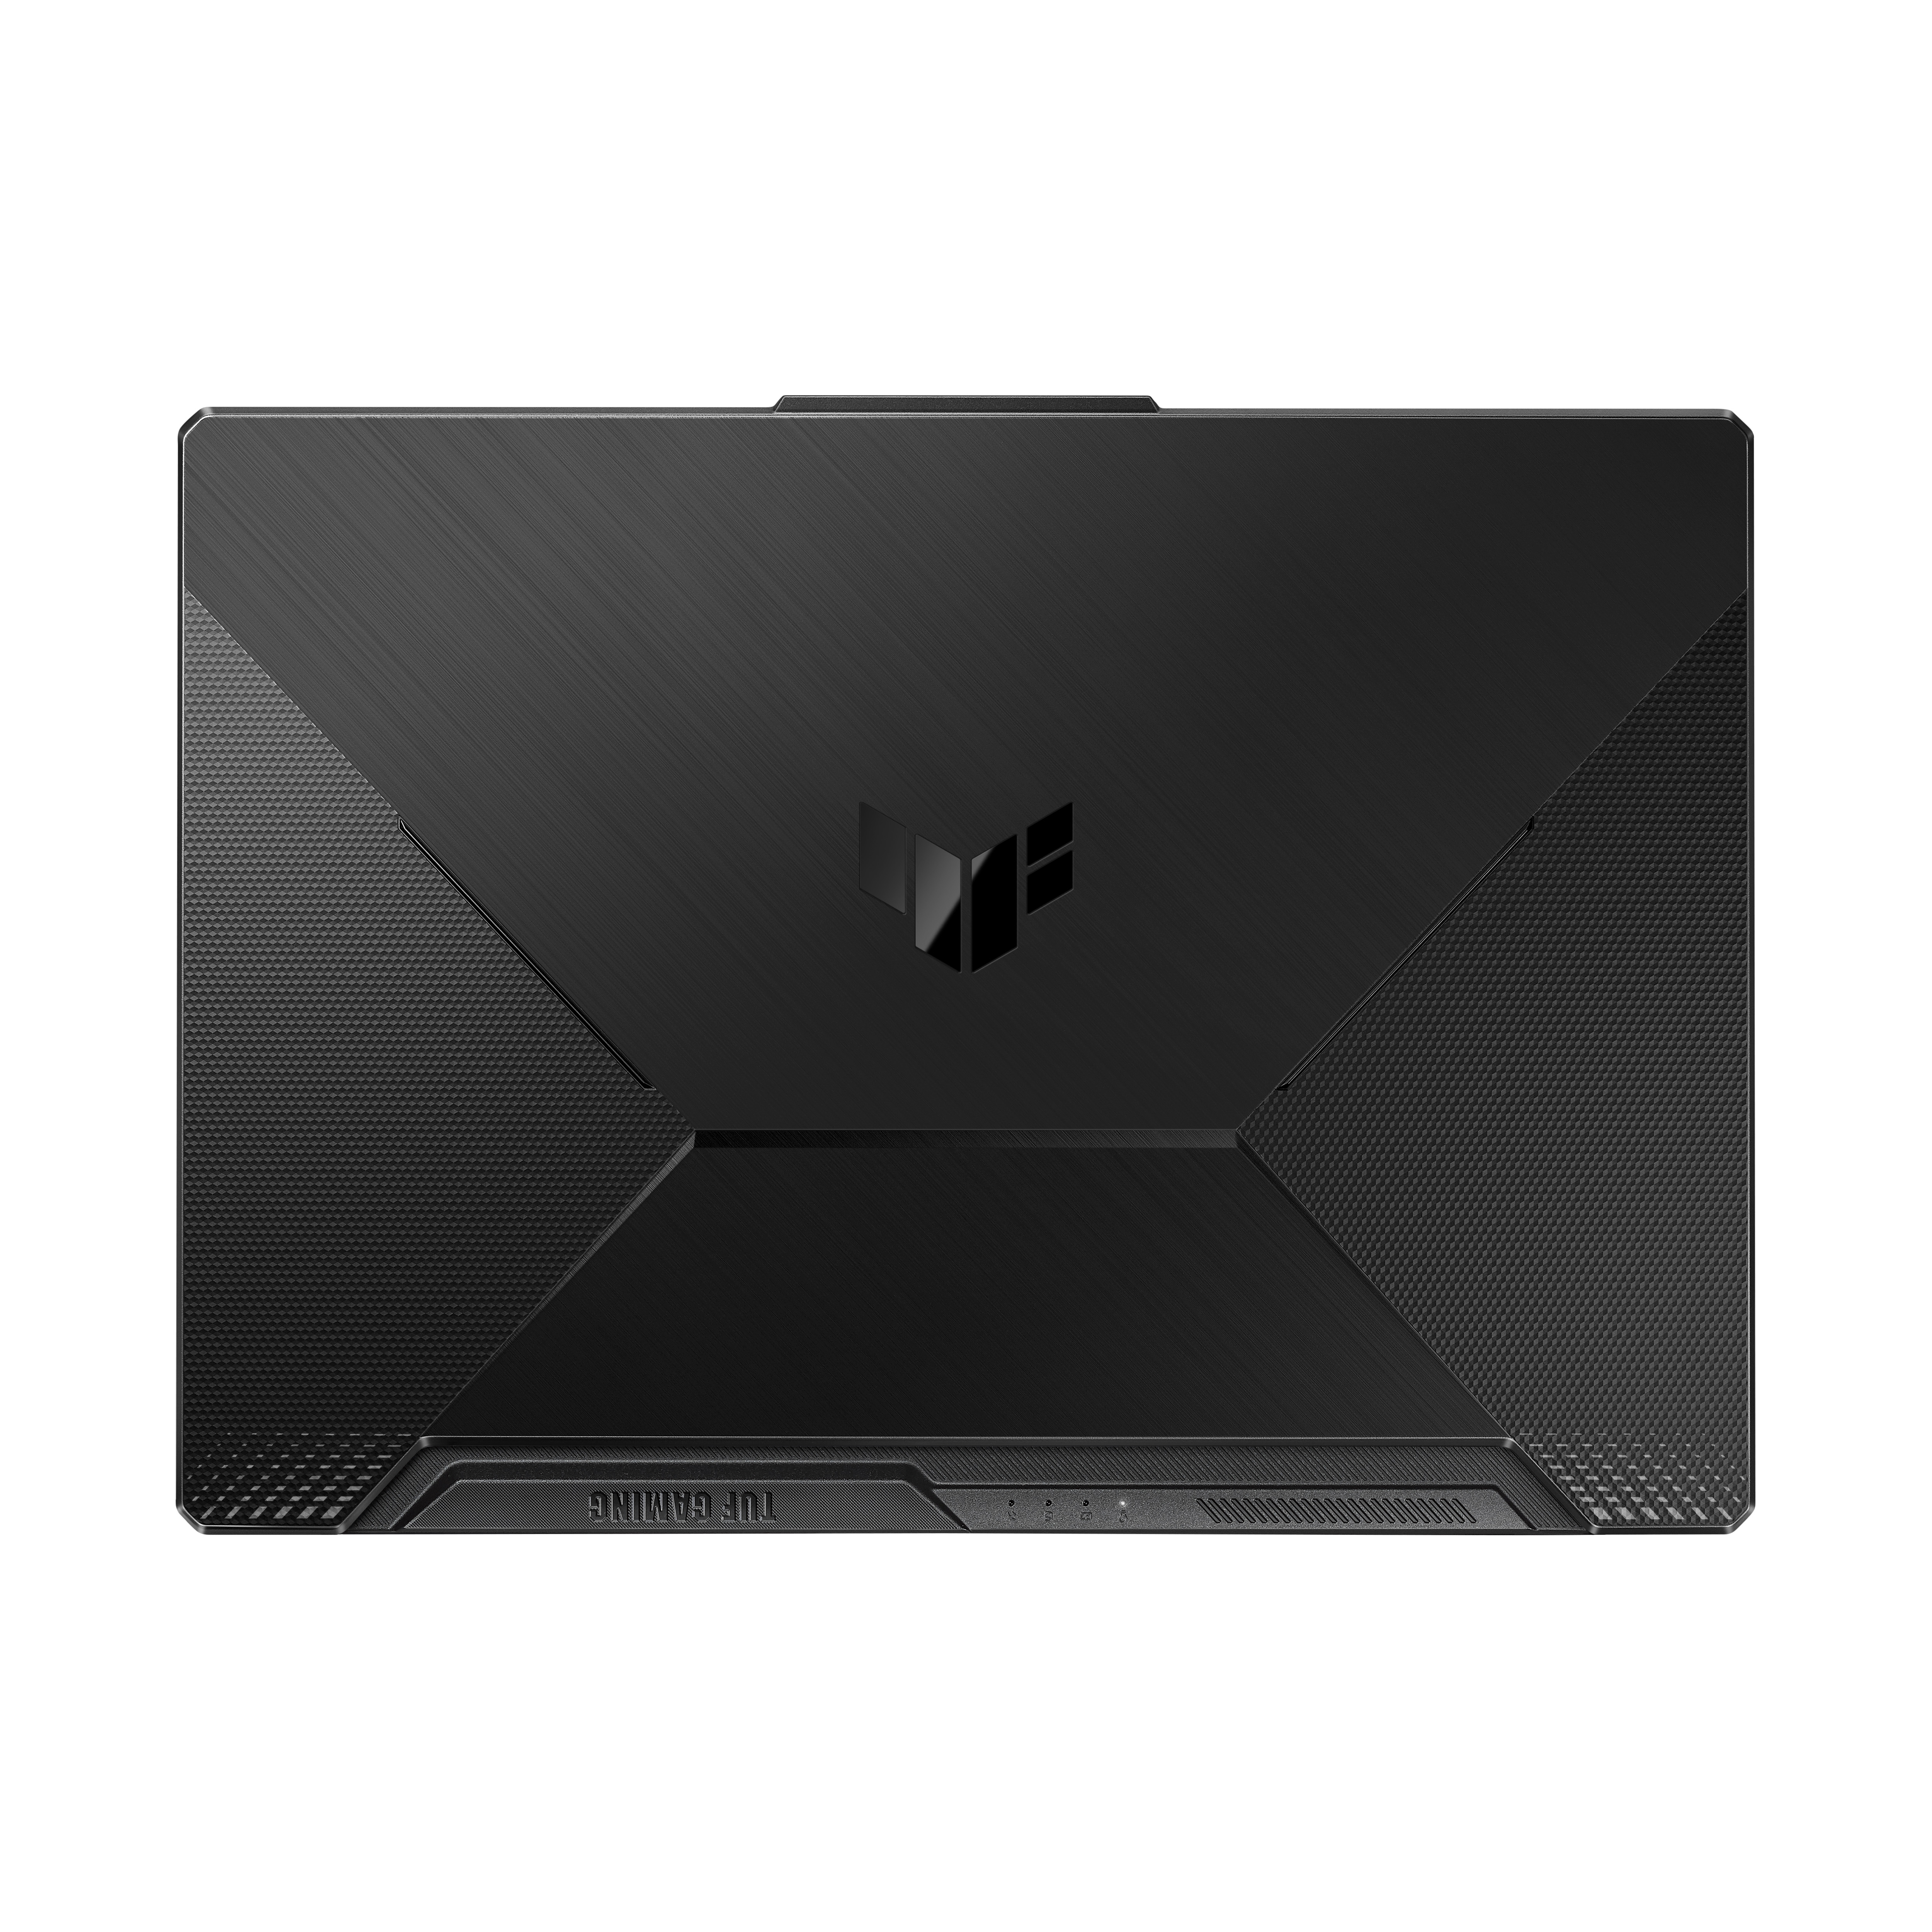 ASUS TUF 15.6" i5 RTX 3050 Gaming Laptop; 15.6” FHD, Intel Core i5-11260H, NVIDIA GeForce RTX 3050, 8GB RAM, 512GB SSD, Graphite Black, Windows 10 Home, FX506HC-WS53 - image 5 of 8